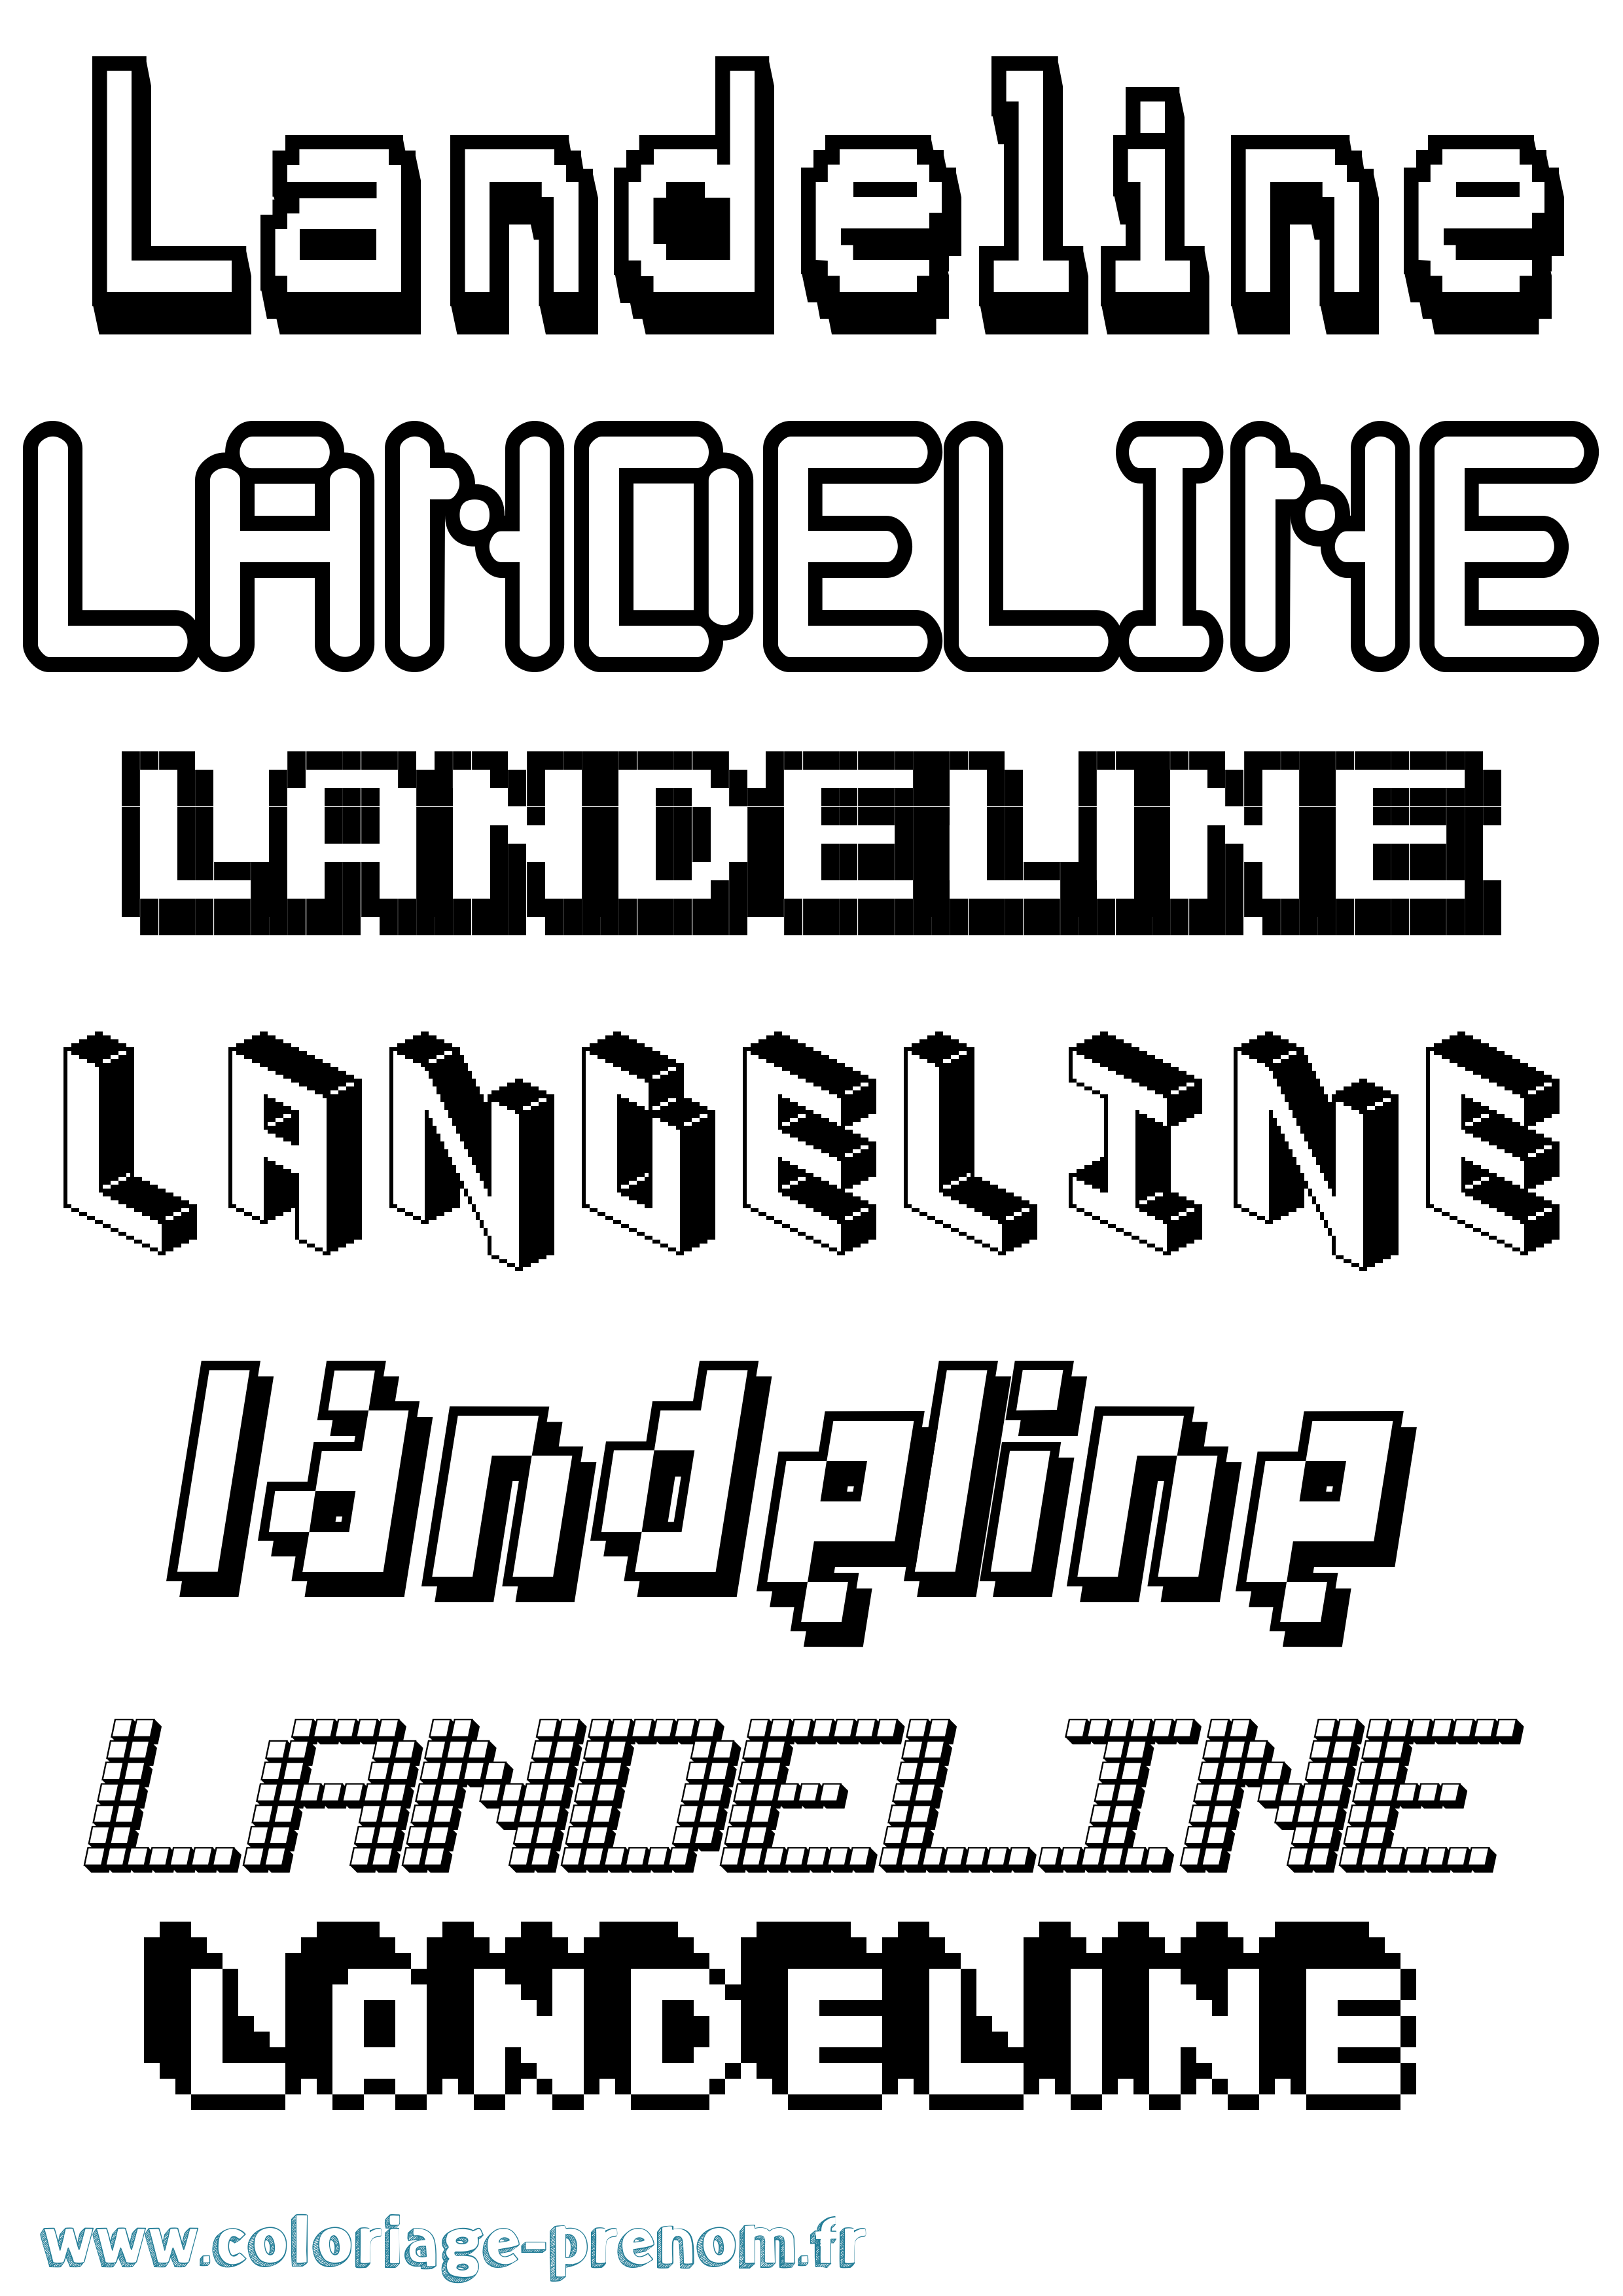 Coloriage prénom Landeline Pixel